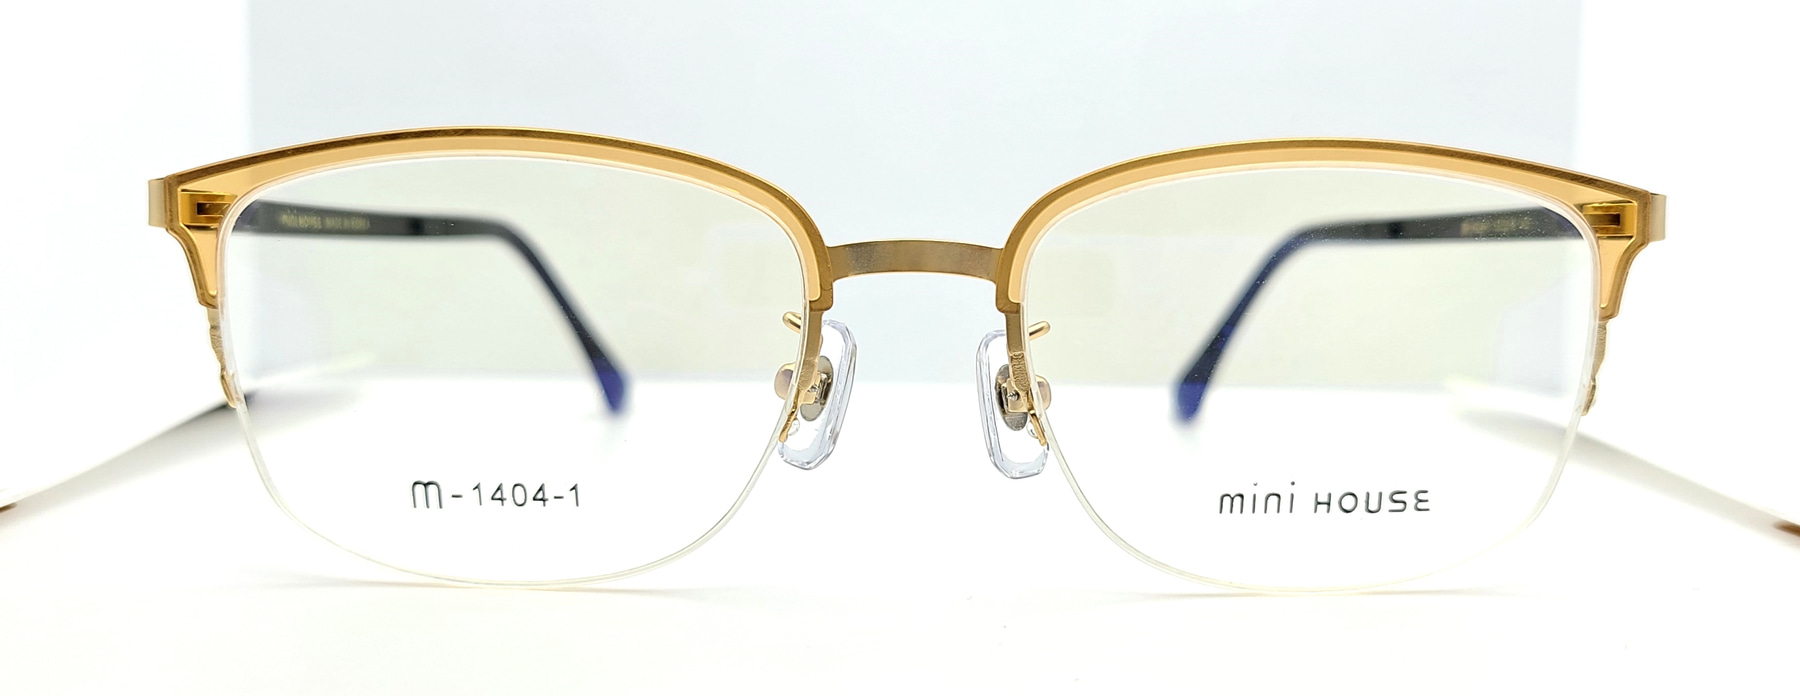 MINIHOUSE M-1404-1, Korean glasses, sunglasses, eyeglasses, glasses